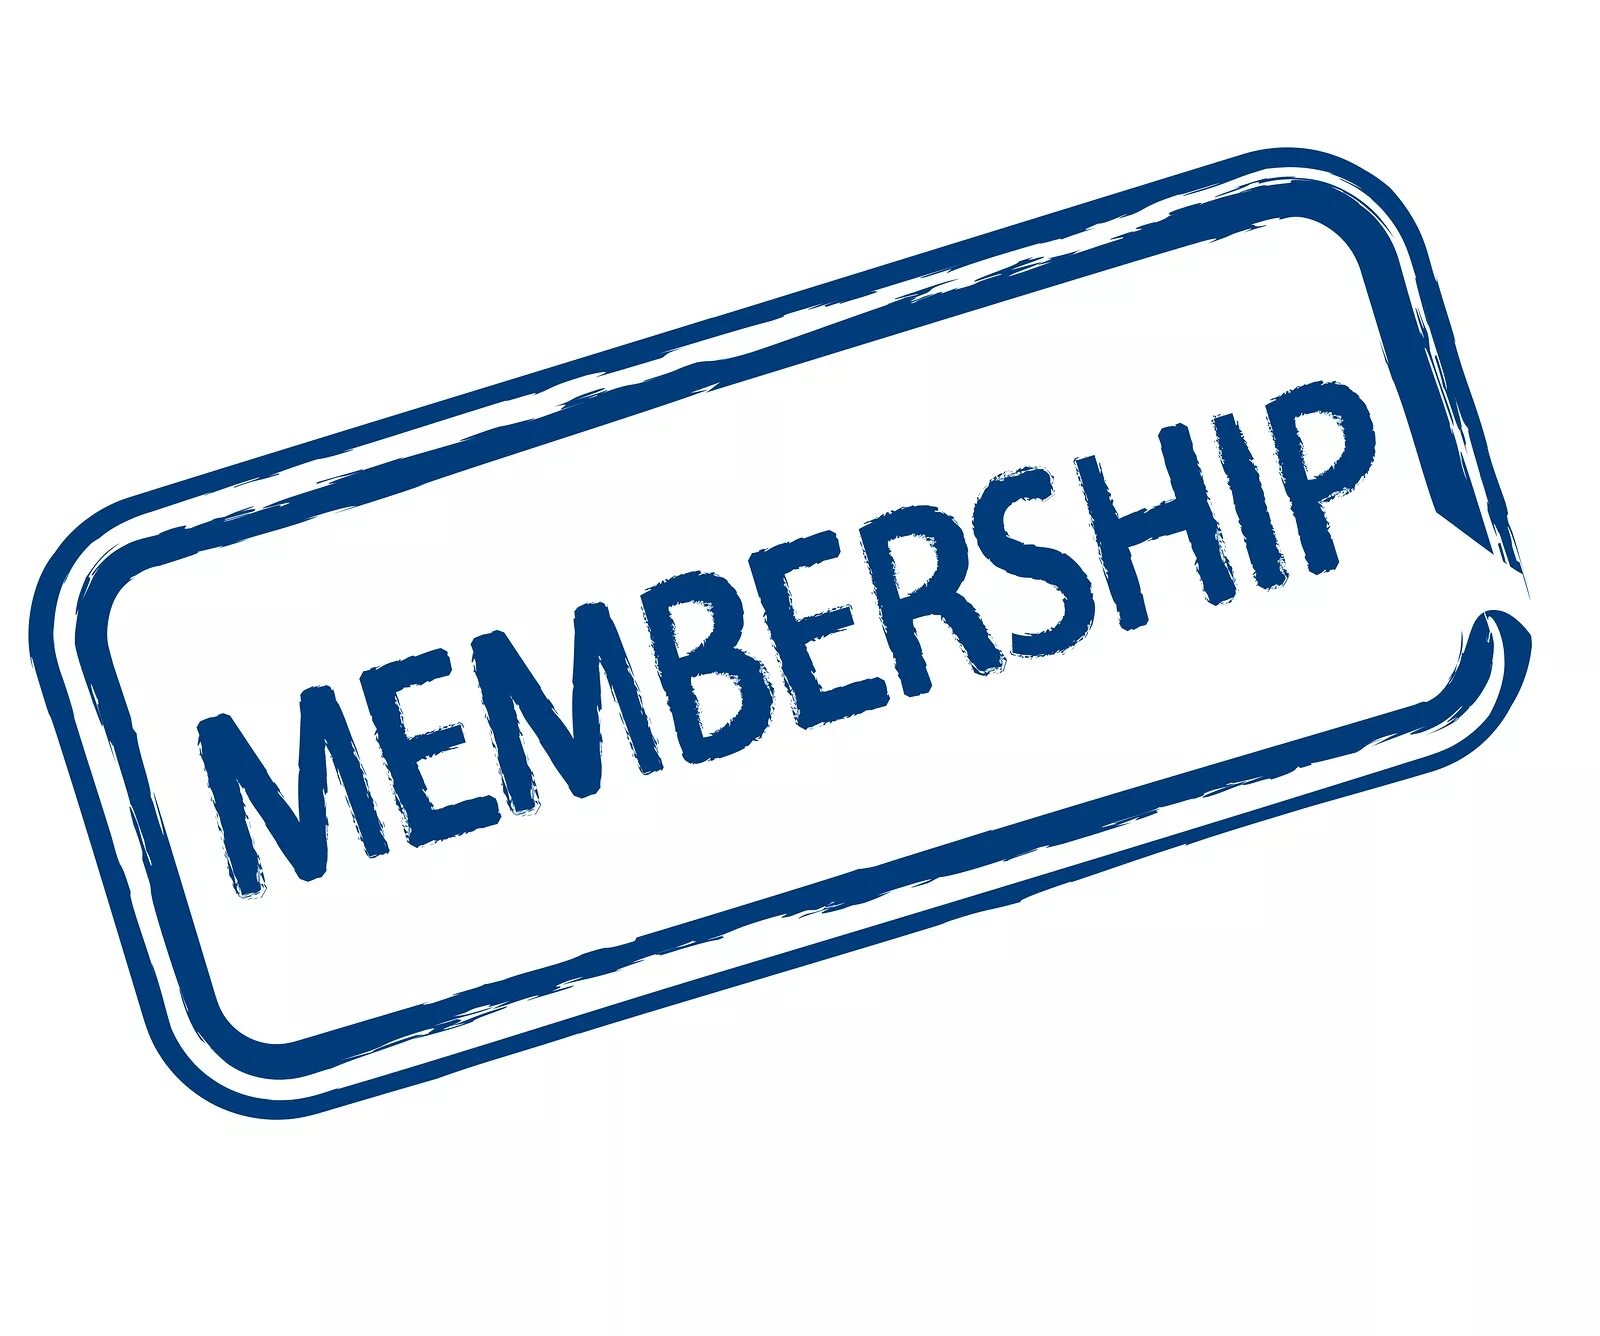 Membership image. Membership fee. Paid membership logo. Due Now. Member now